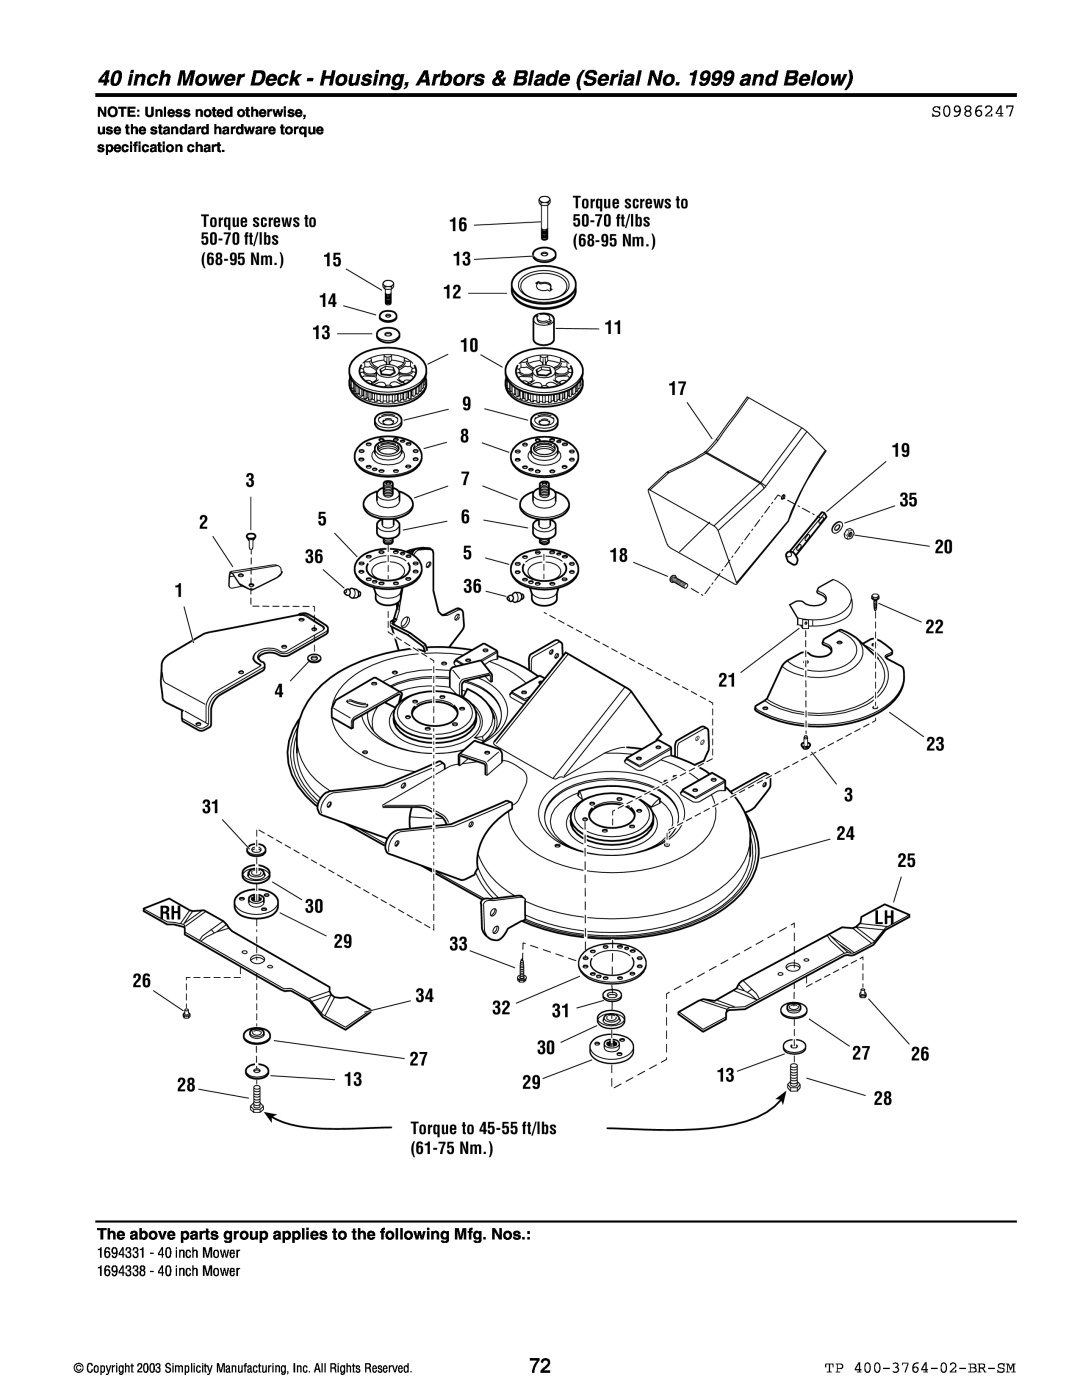 Simplicity Baron / 2400 manual Torque screws to 50-70 ft/lbs, 68-95 Nm, Torque to 45-55 ft/lbs, 61-75 Nm, S0986247 